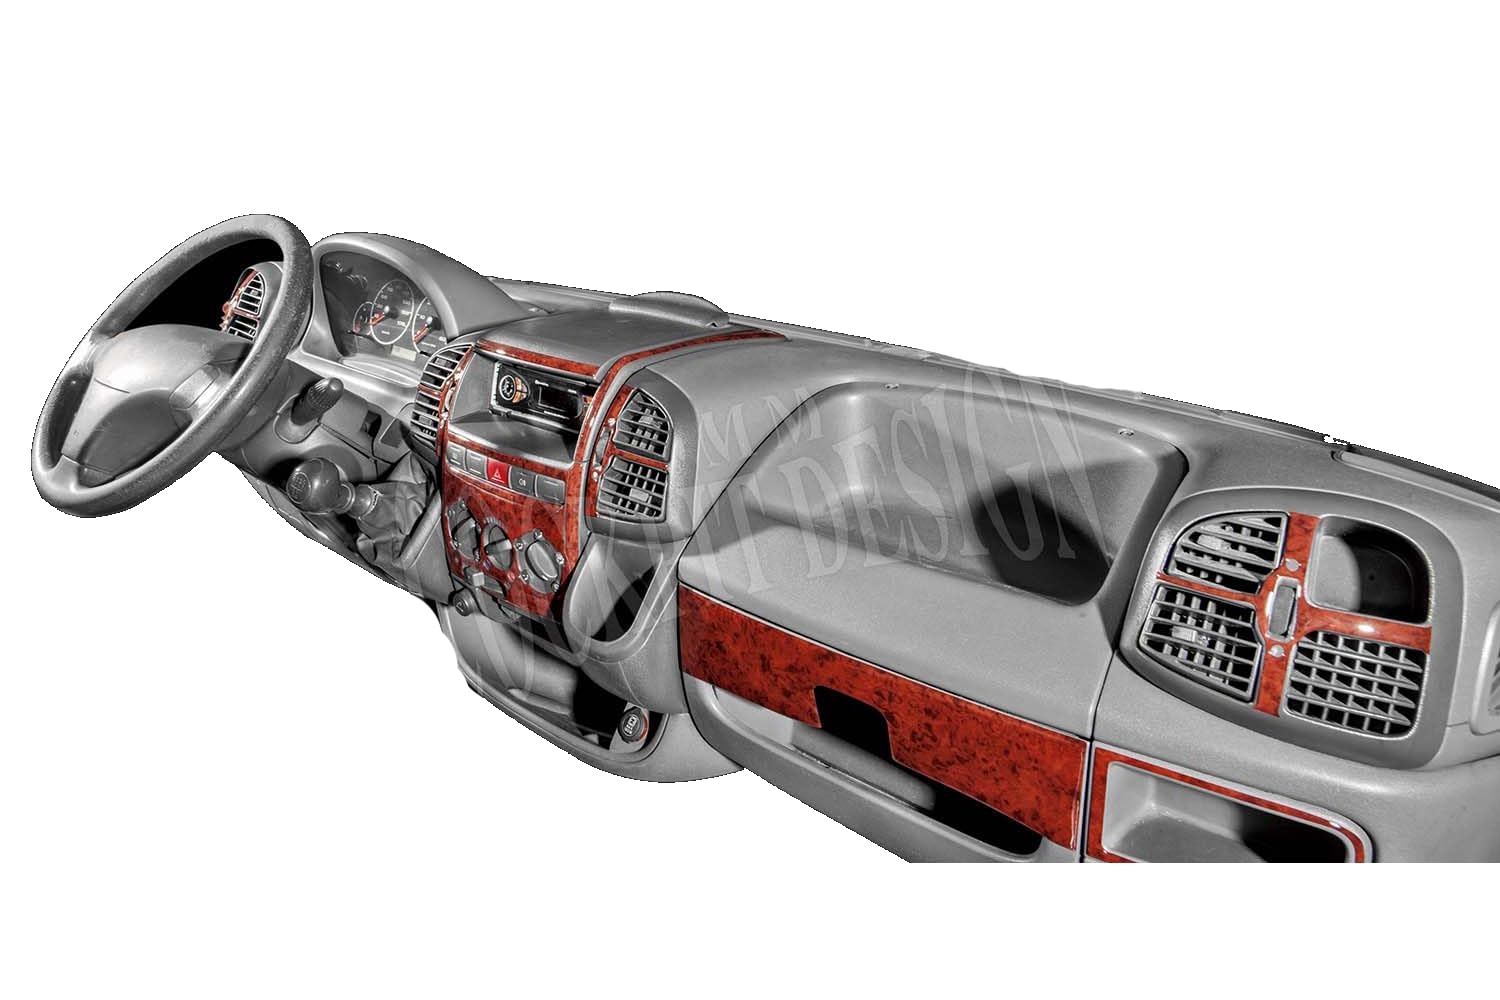 AUTOKLEIDUNG® Cockpit Dekor kompatibel mit Fiat Ducato Baujahr 03/2002-01/2006 15 Teile | 3D Carbon Optik von Autokleidung